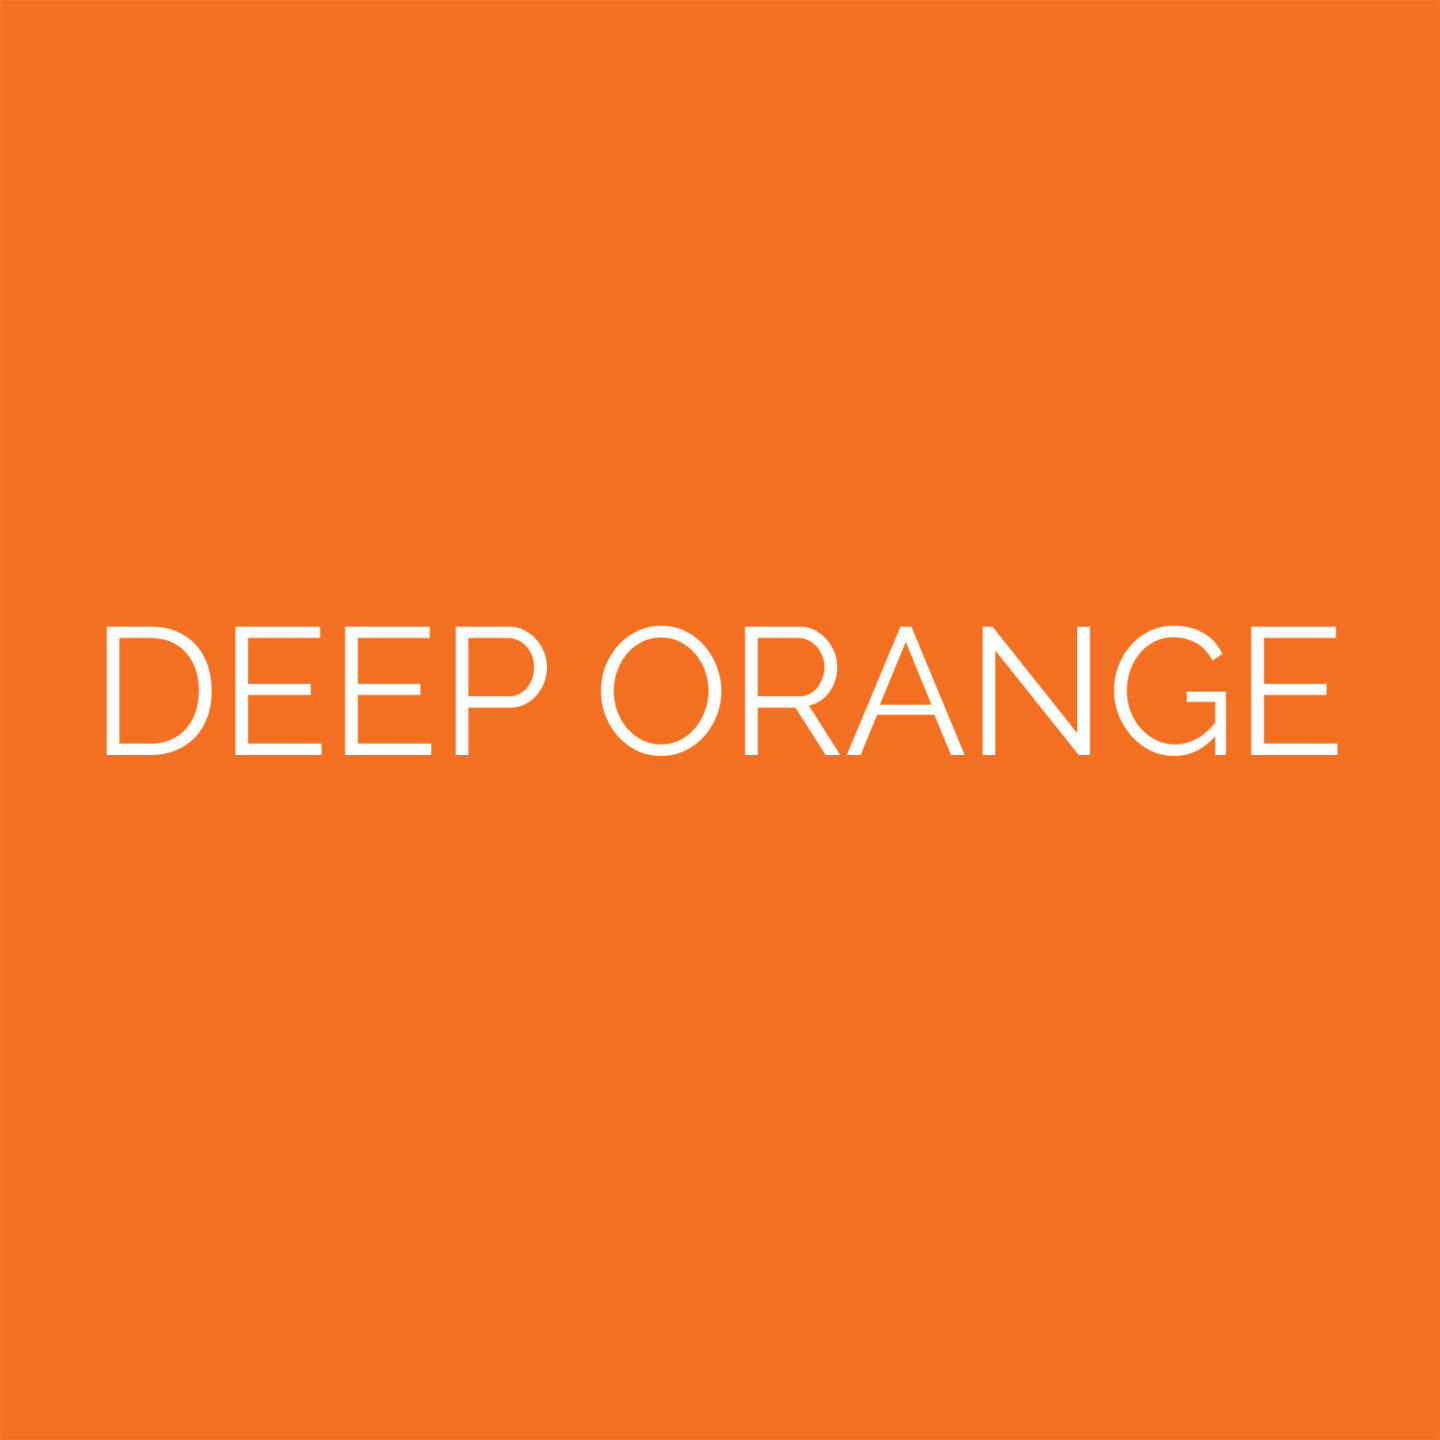 laser cut deep orange